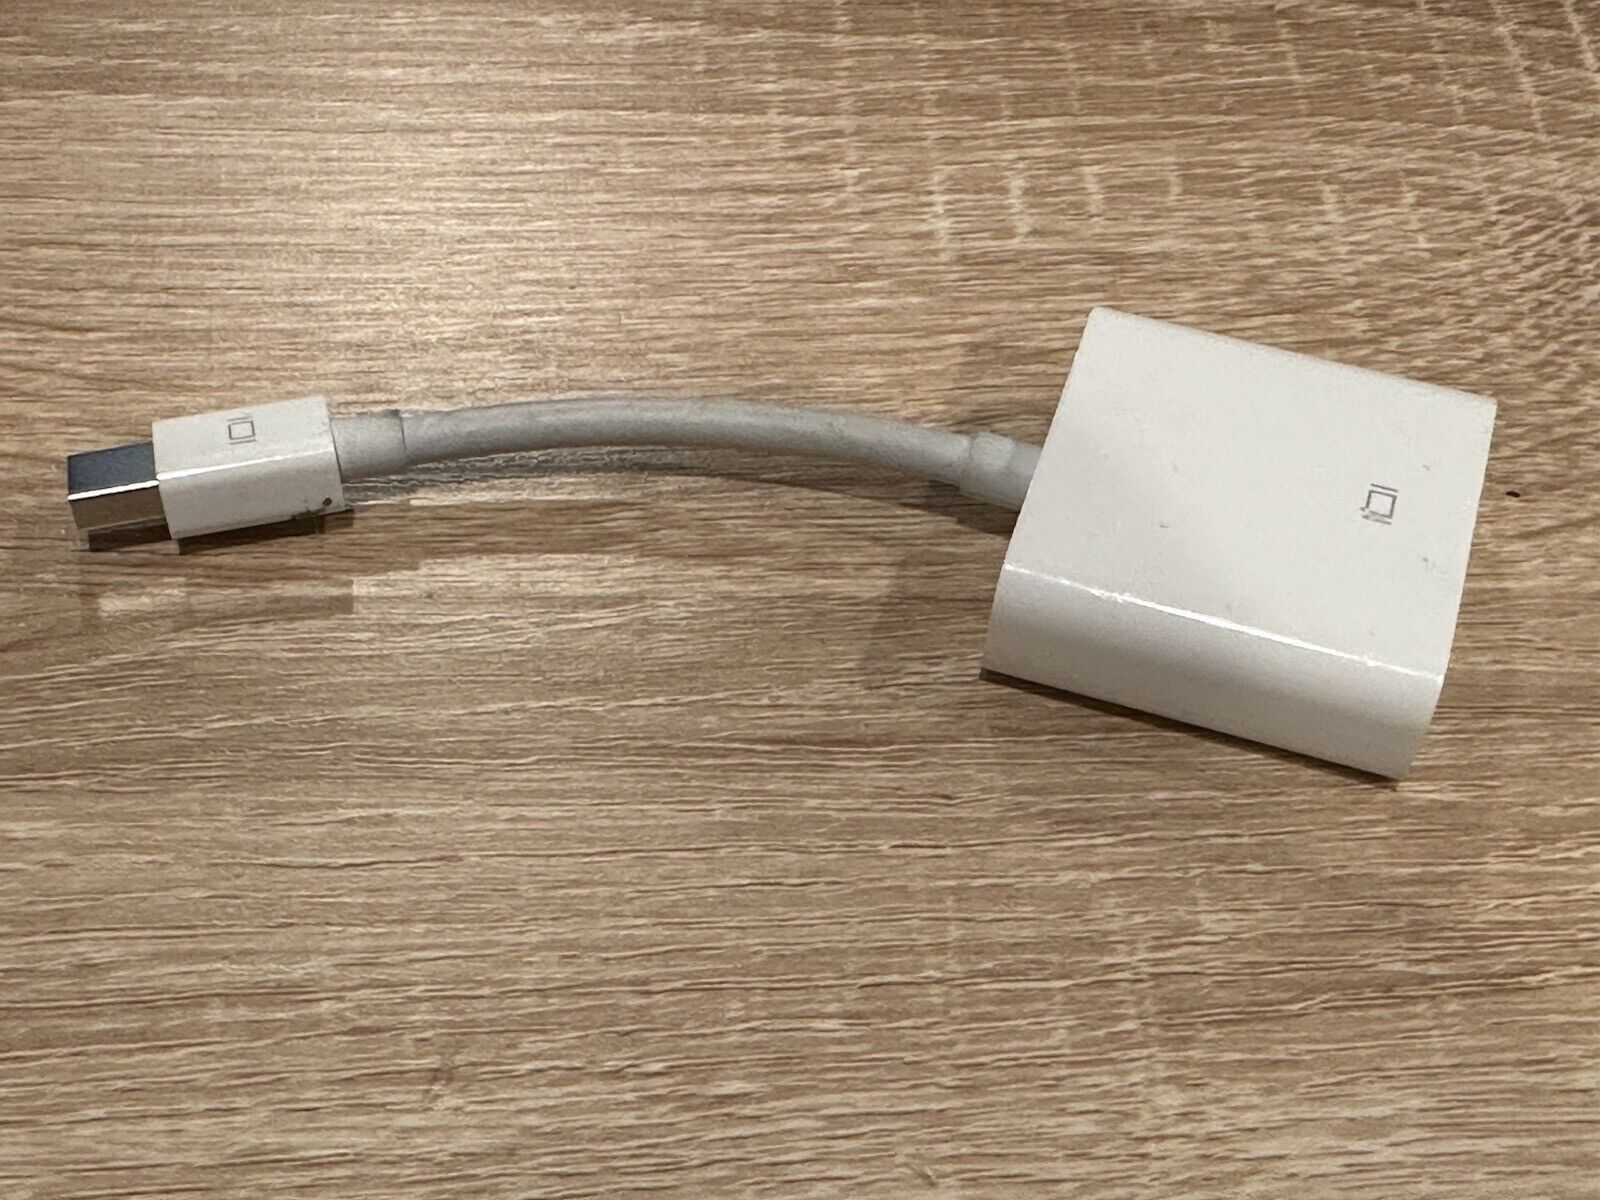 Apple Thunderbolt Mini DisplayPort to DVI Adapter A1305